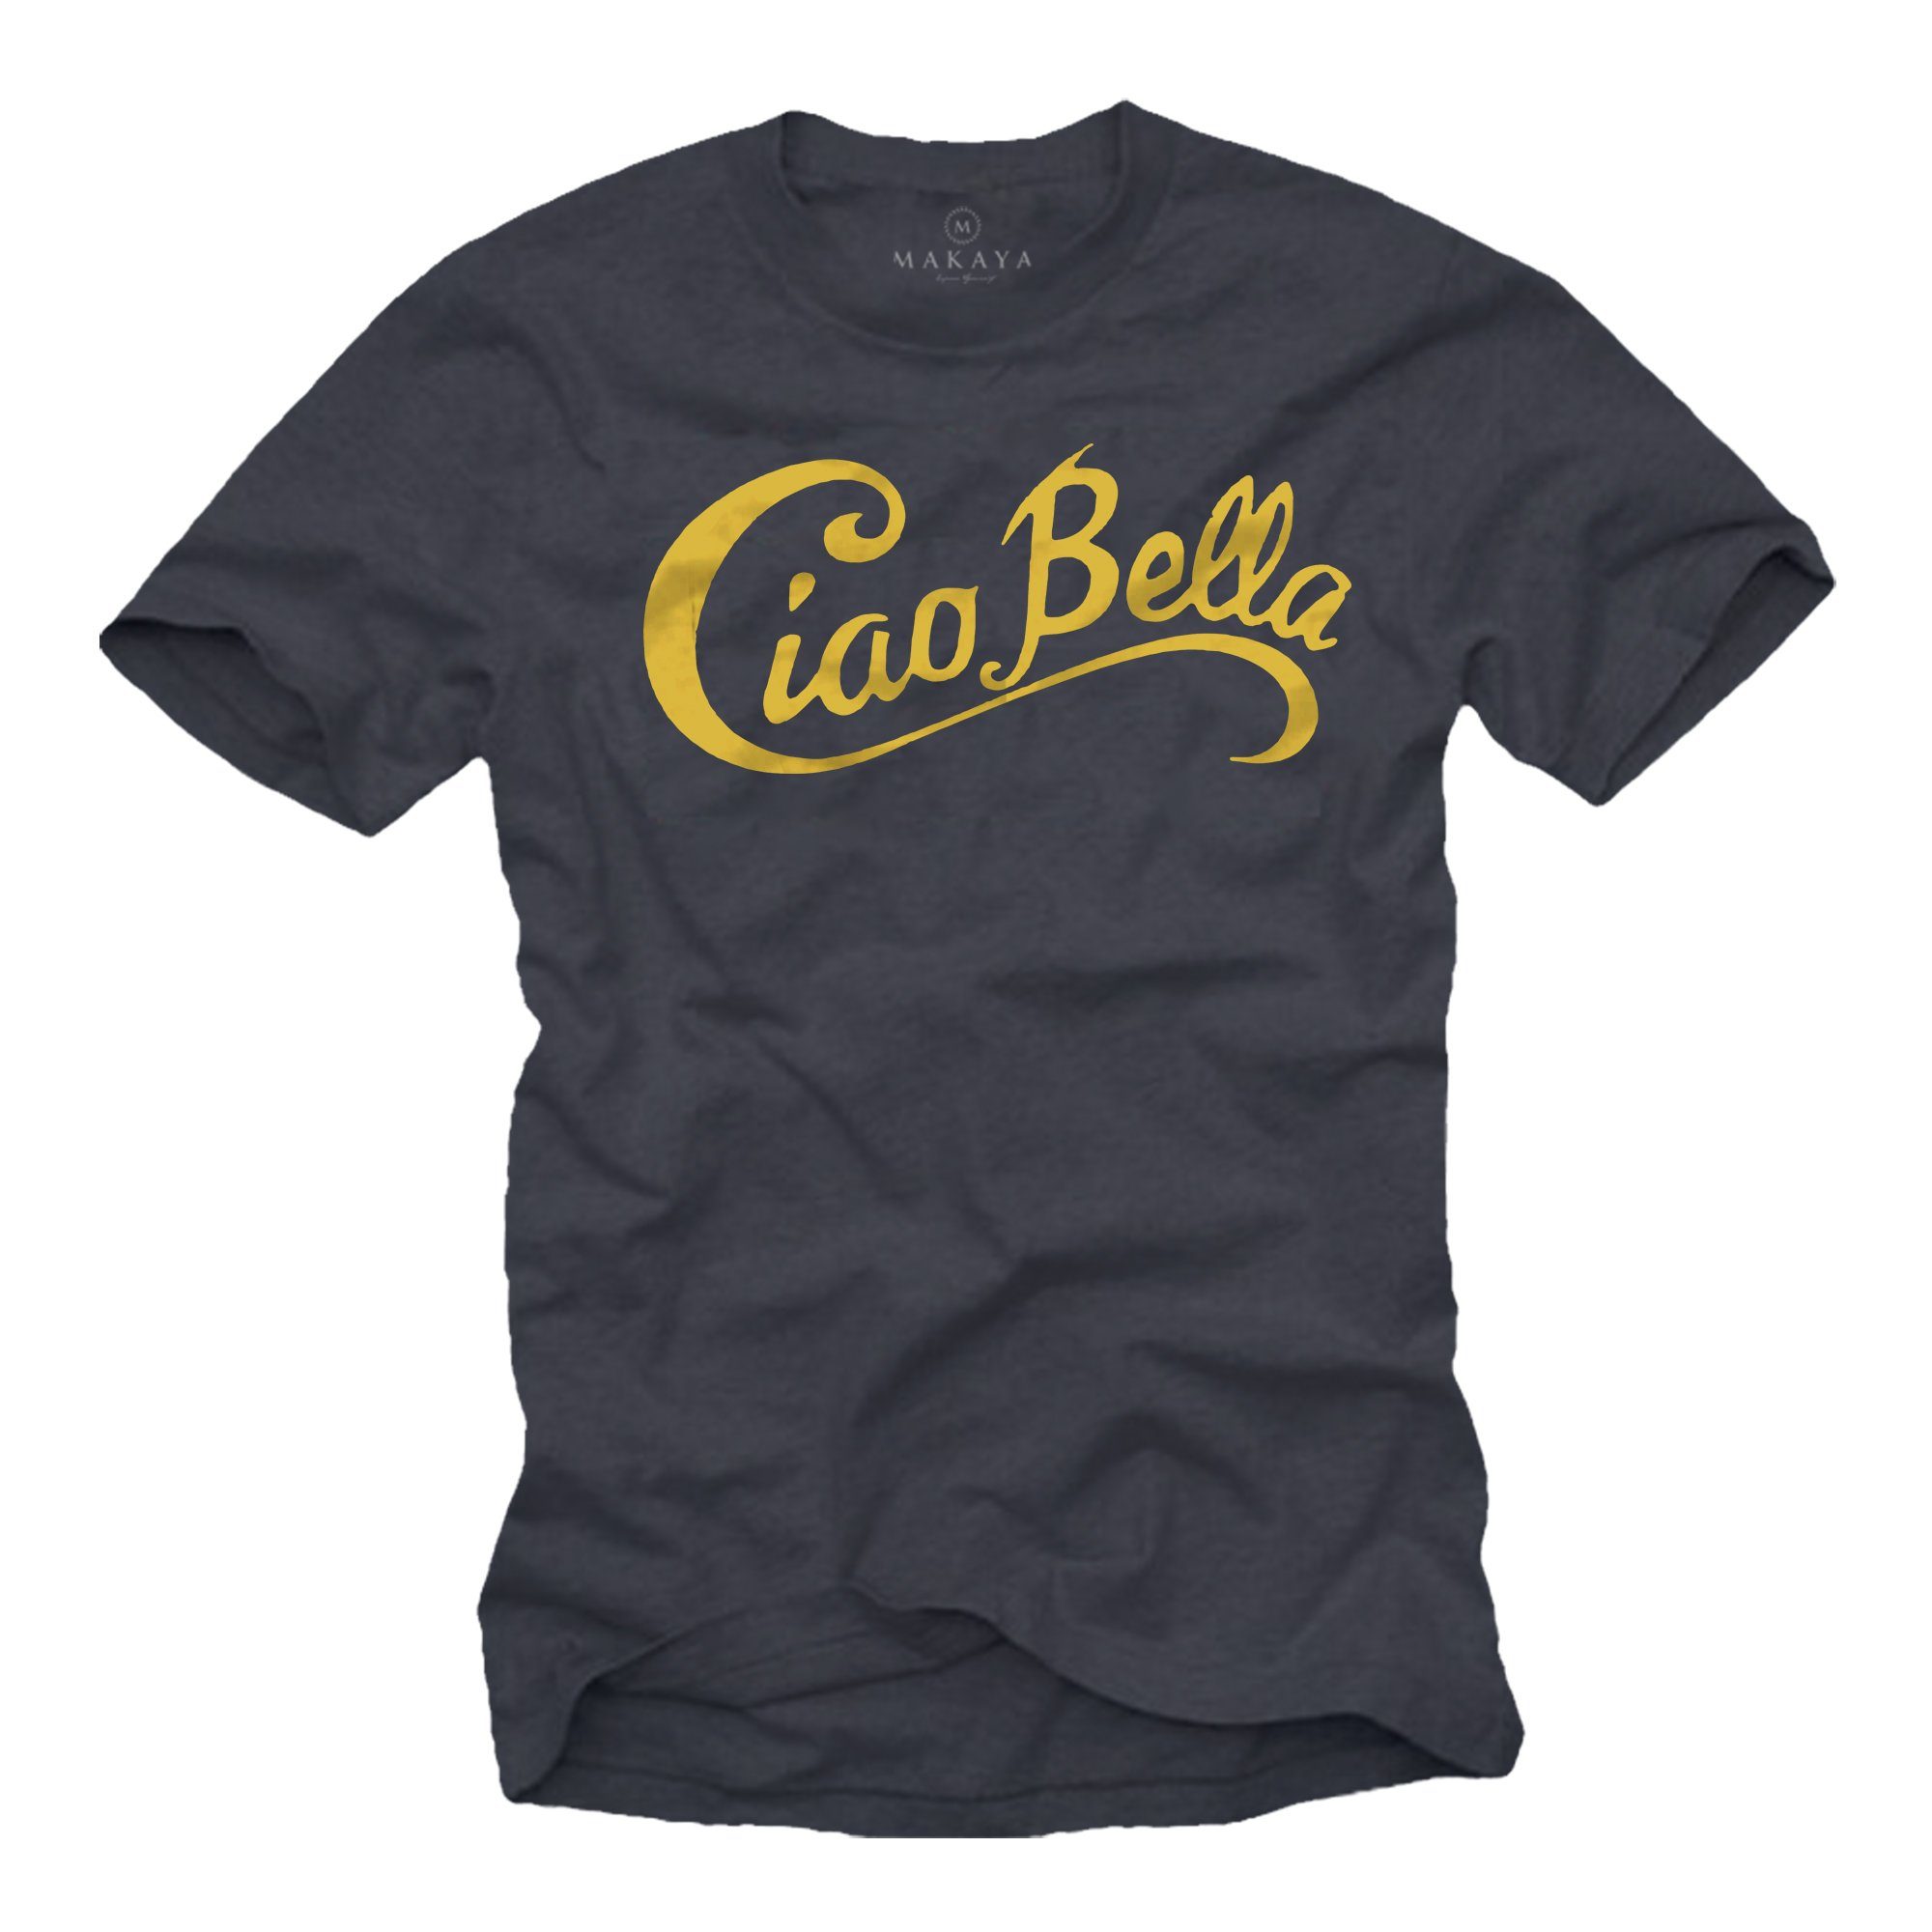 Mode Motiv Bella Italienischer Blaugrau MAKAYA Print-Shirt Style Herren Spruch Coole Ciao Italien Logo,